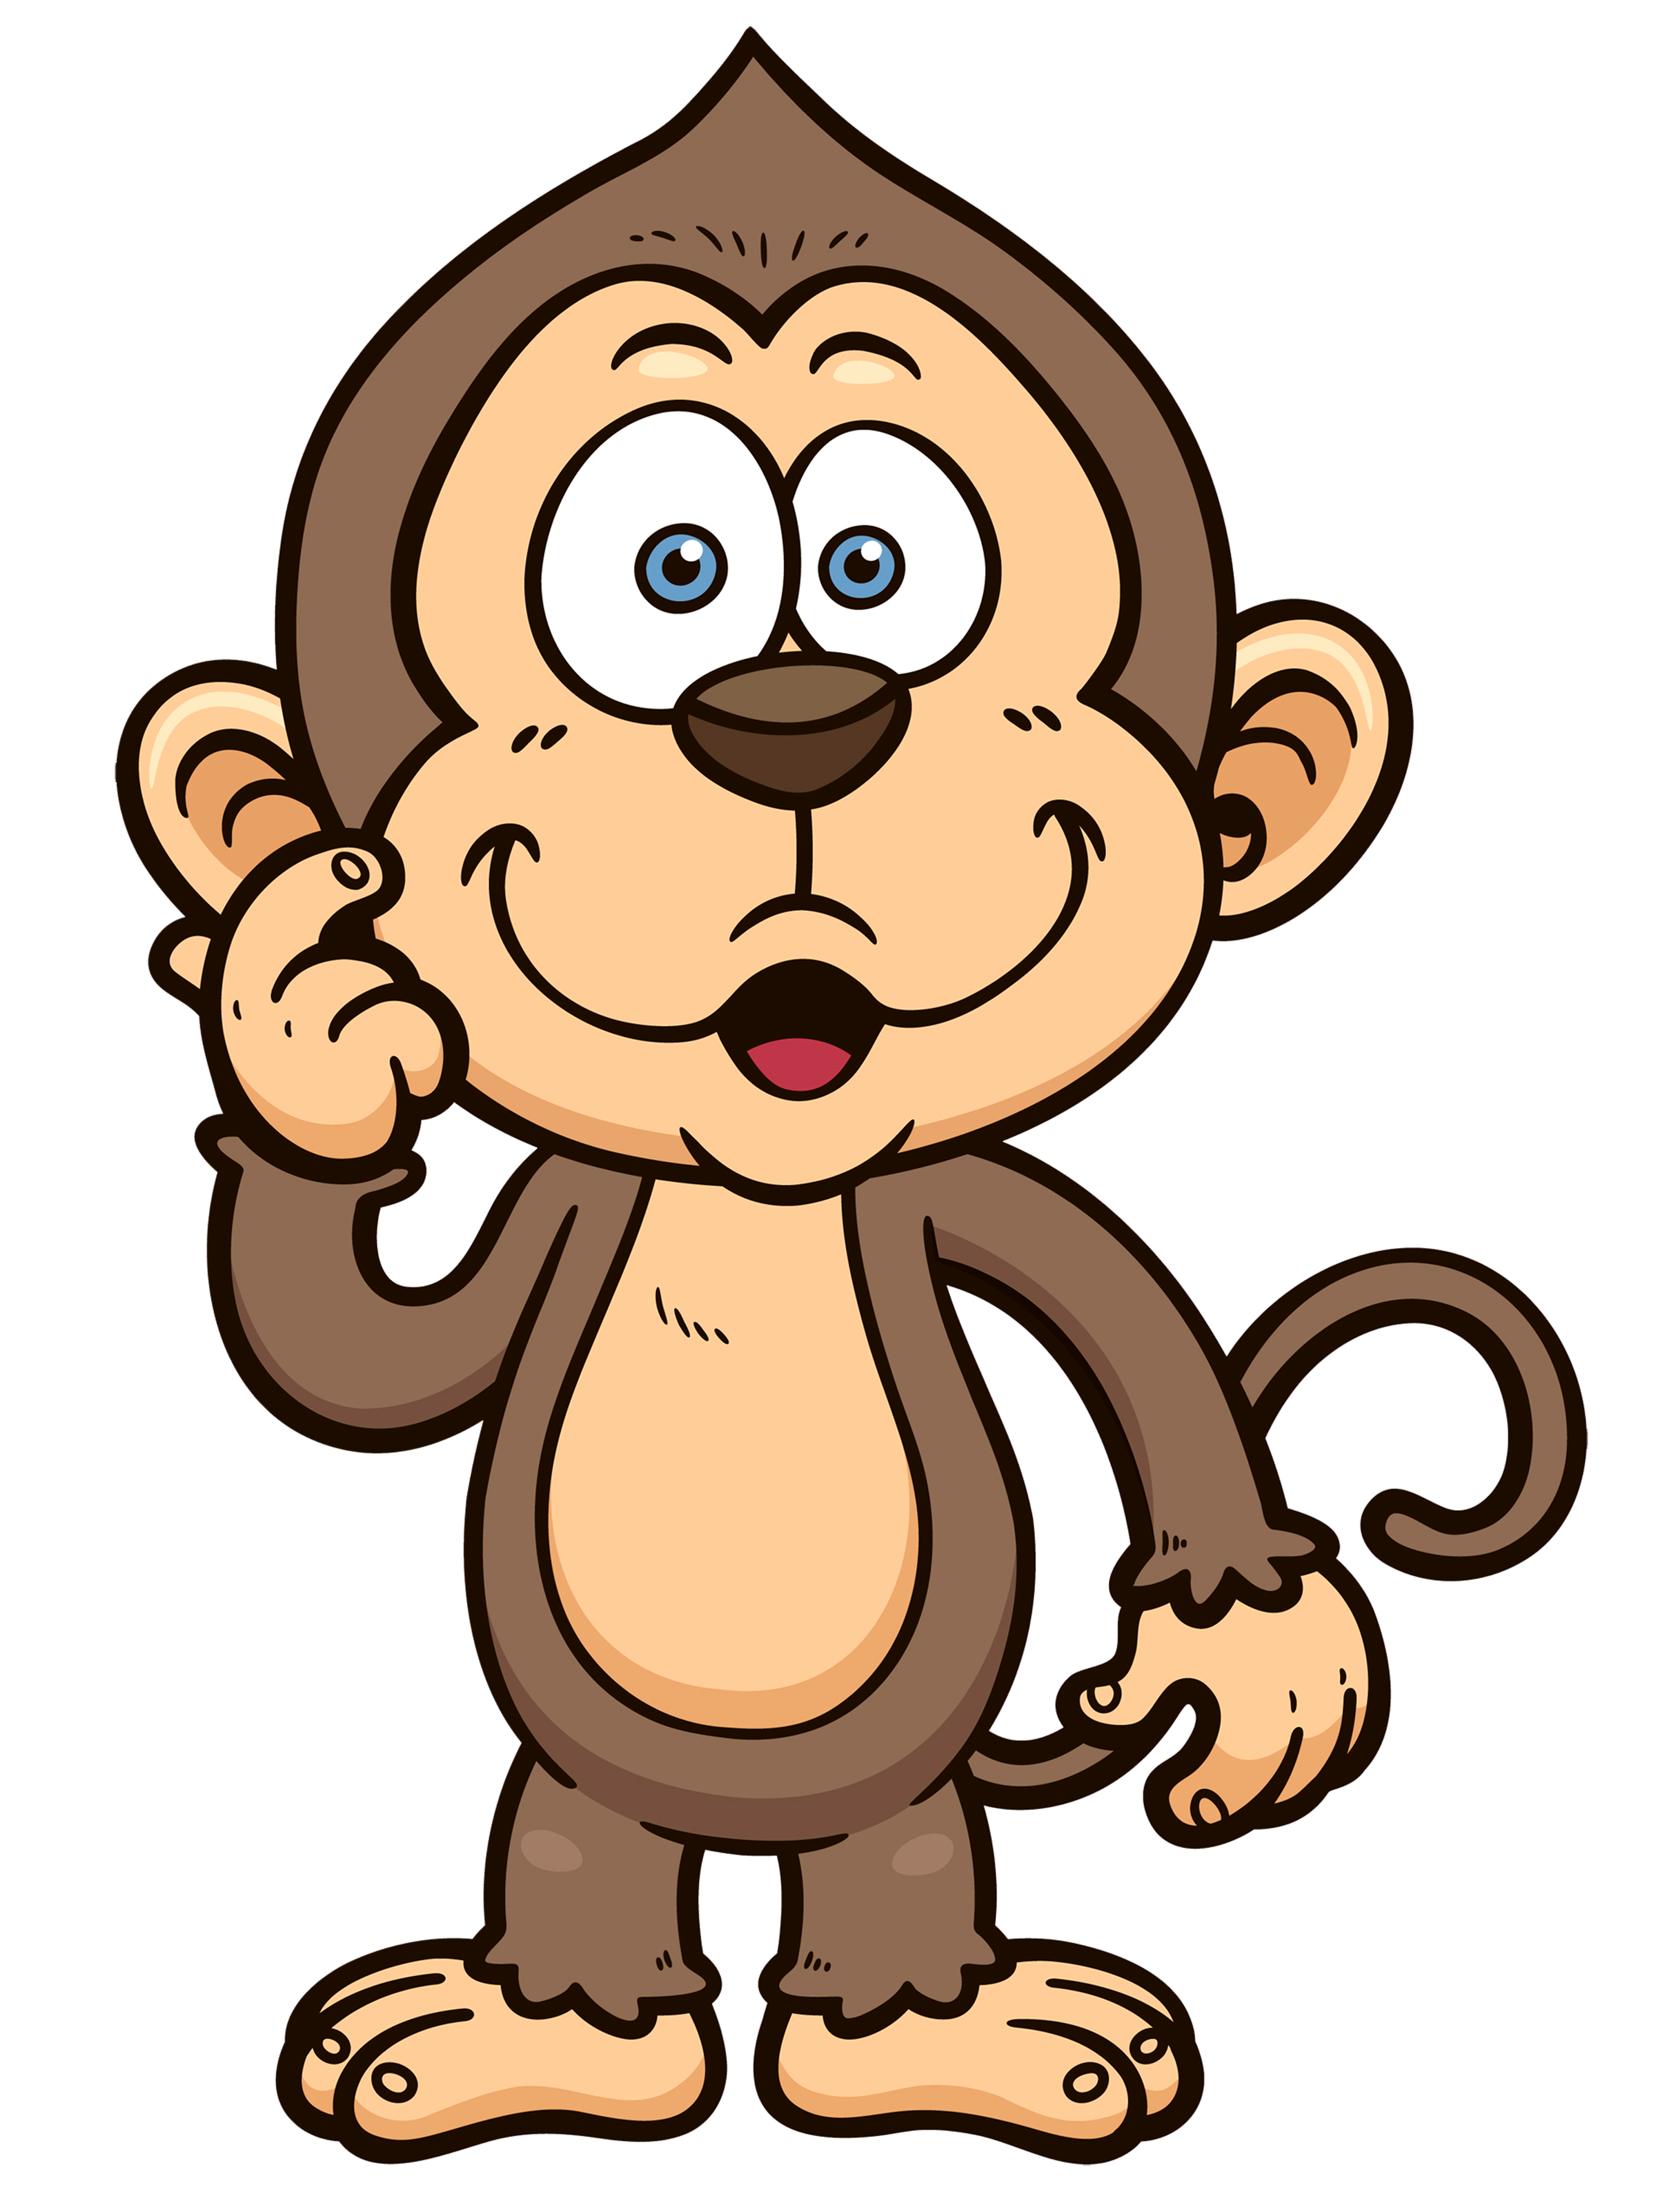 Doctor monkey